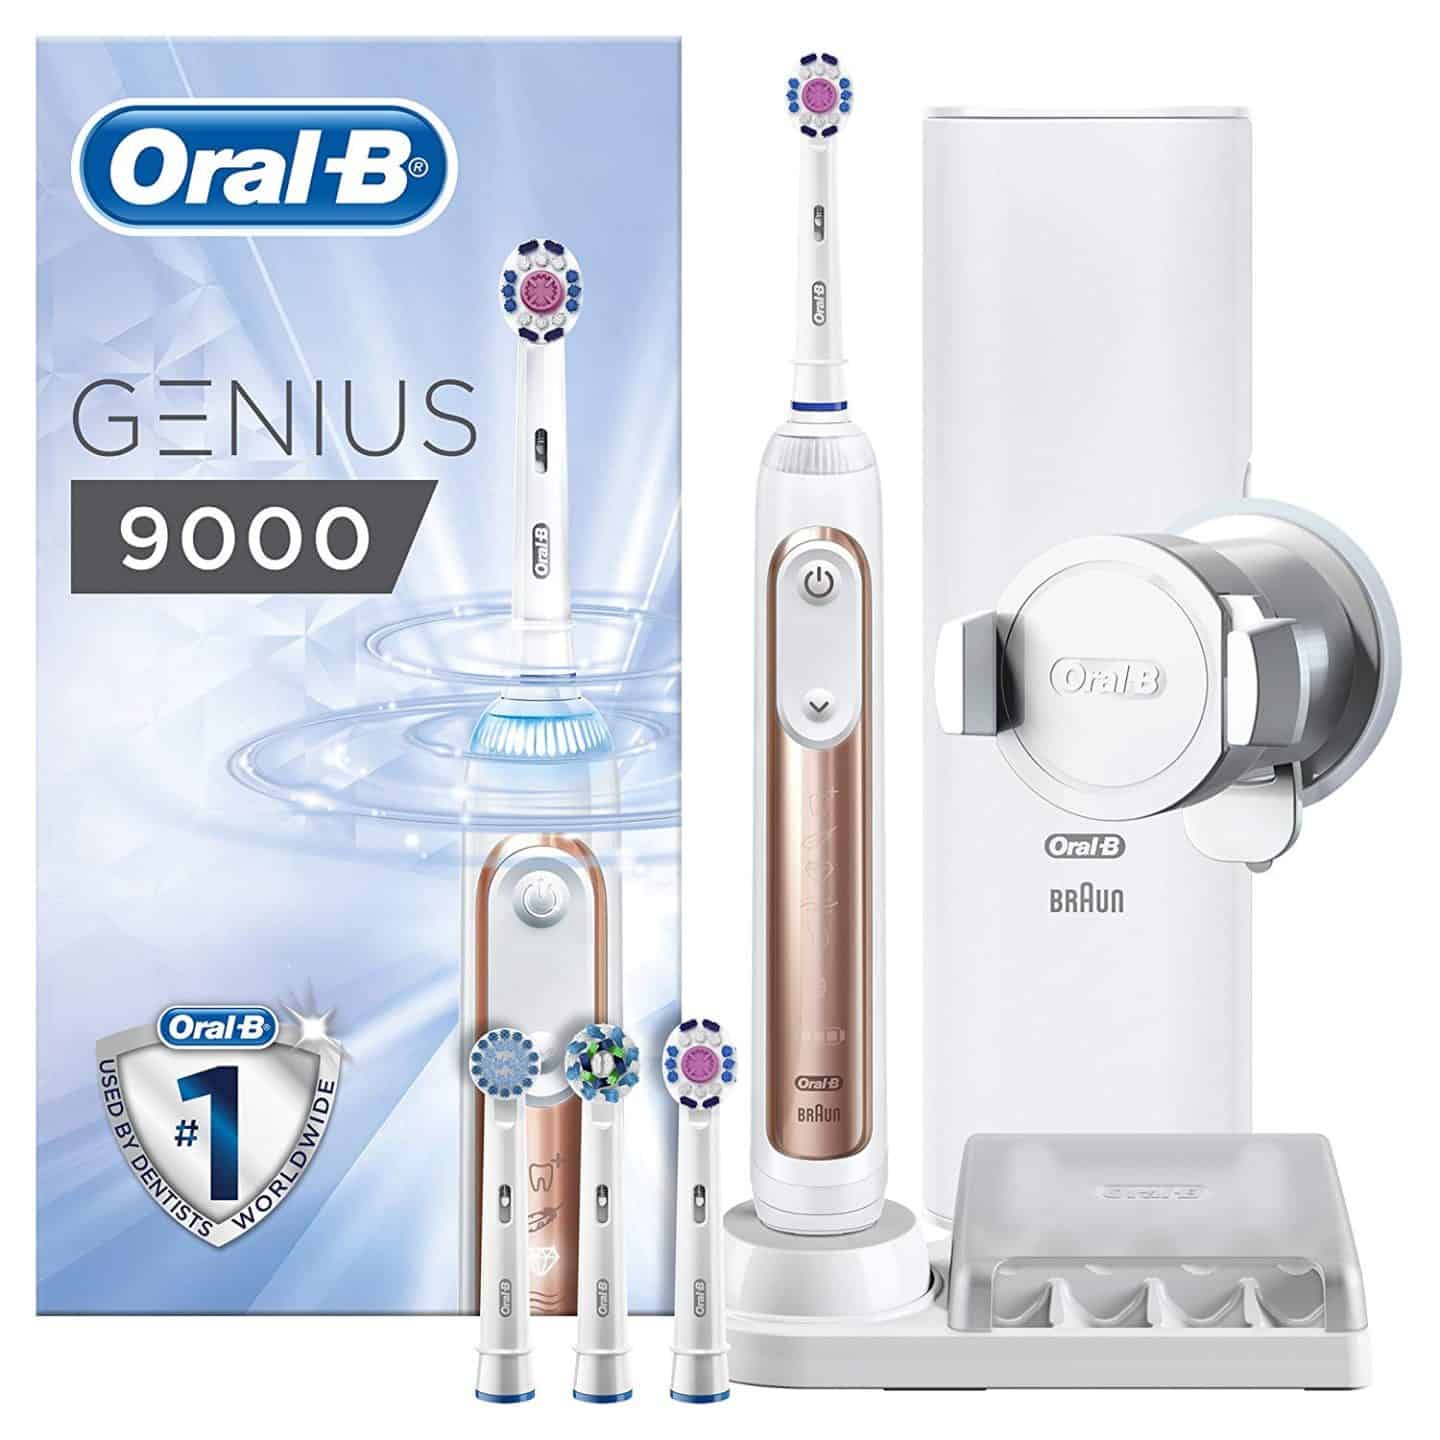 Oral B Genius 9000 toothbrush and box